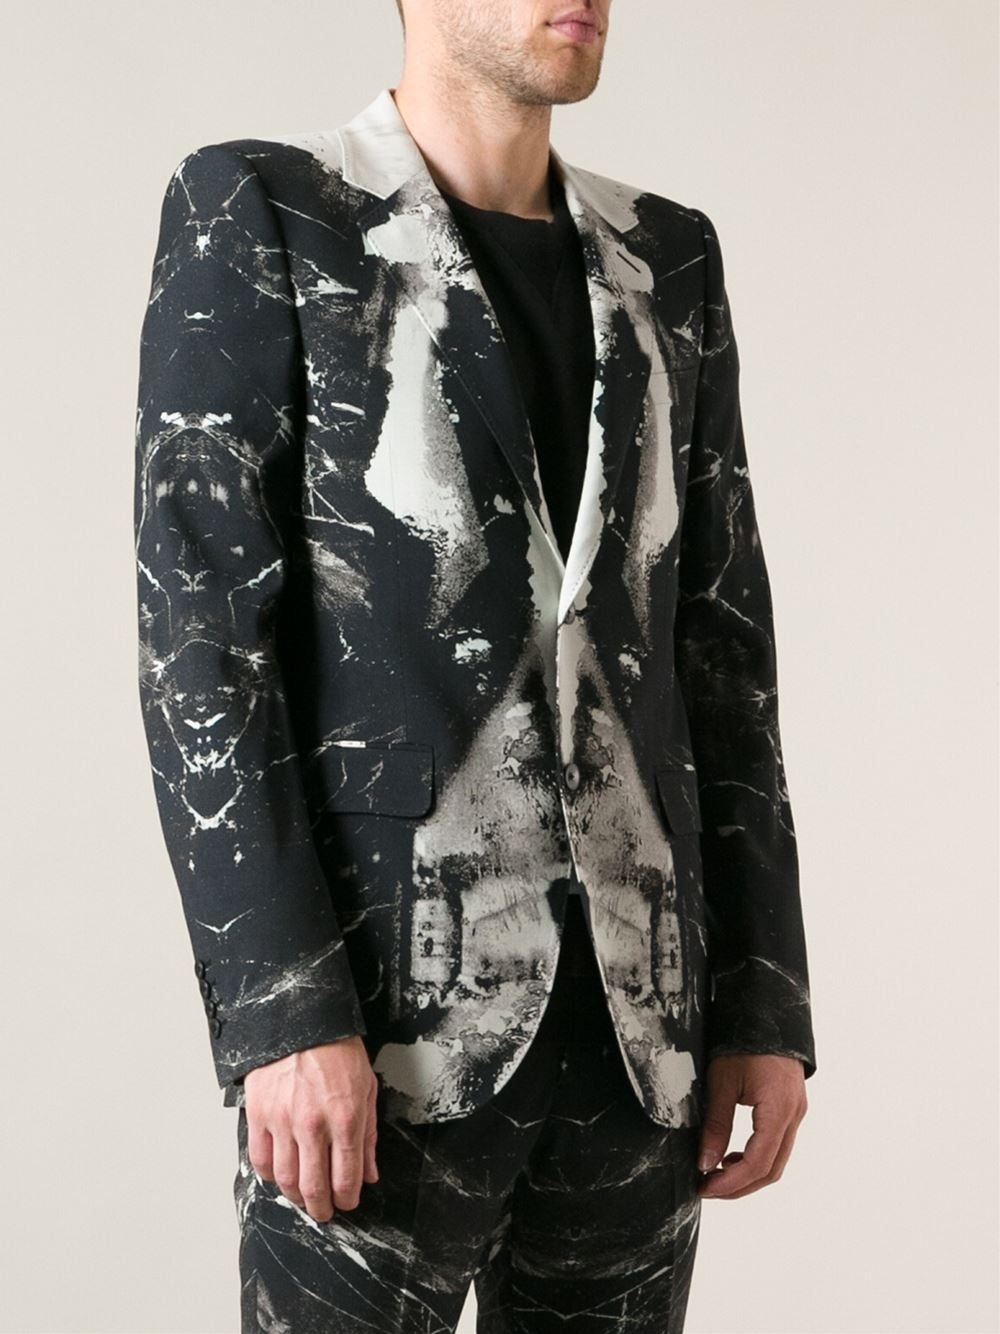 Alexander McQueen Graphic Print Blazer in Black for Men - Lyst